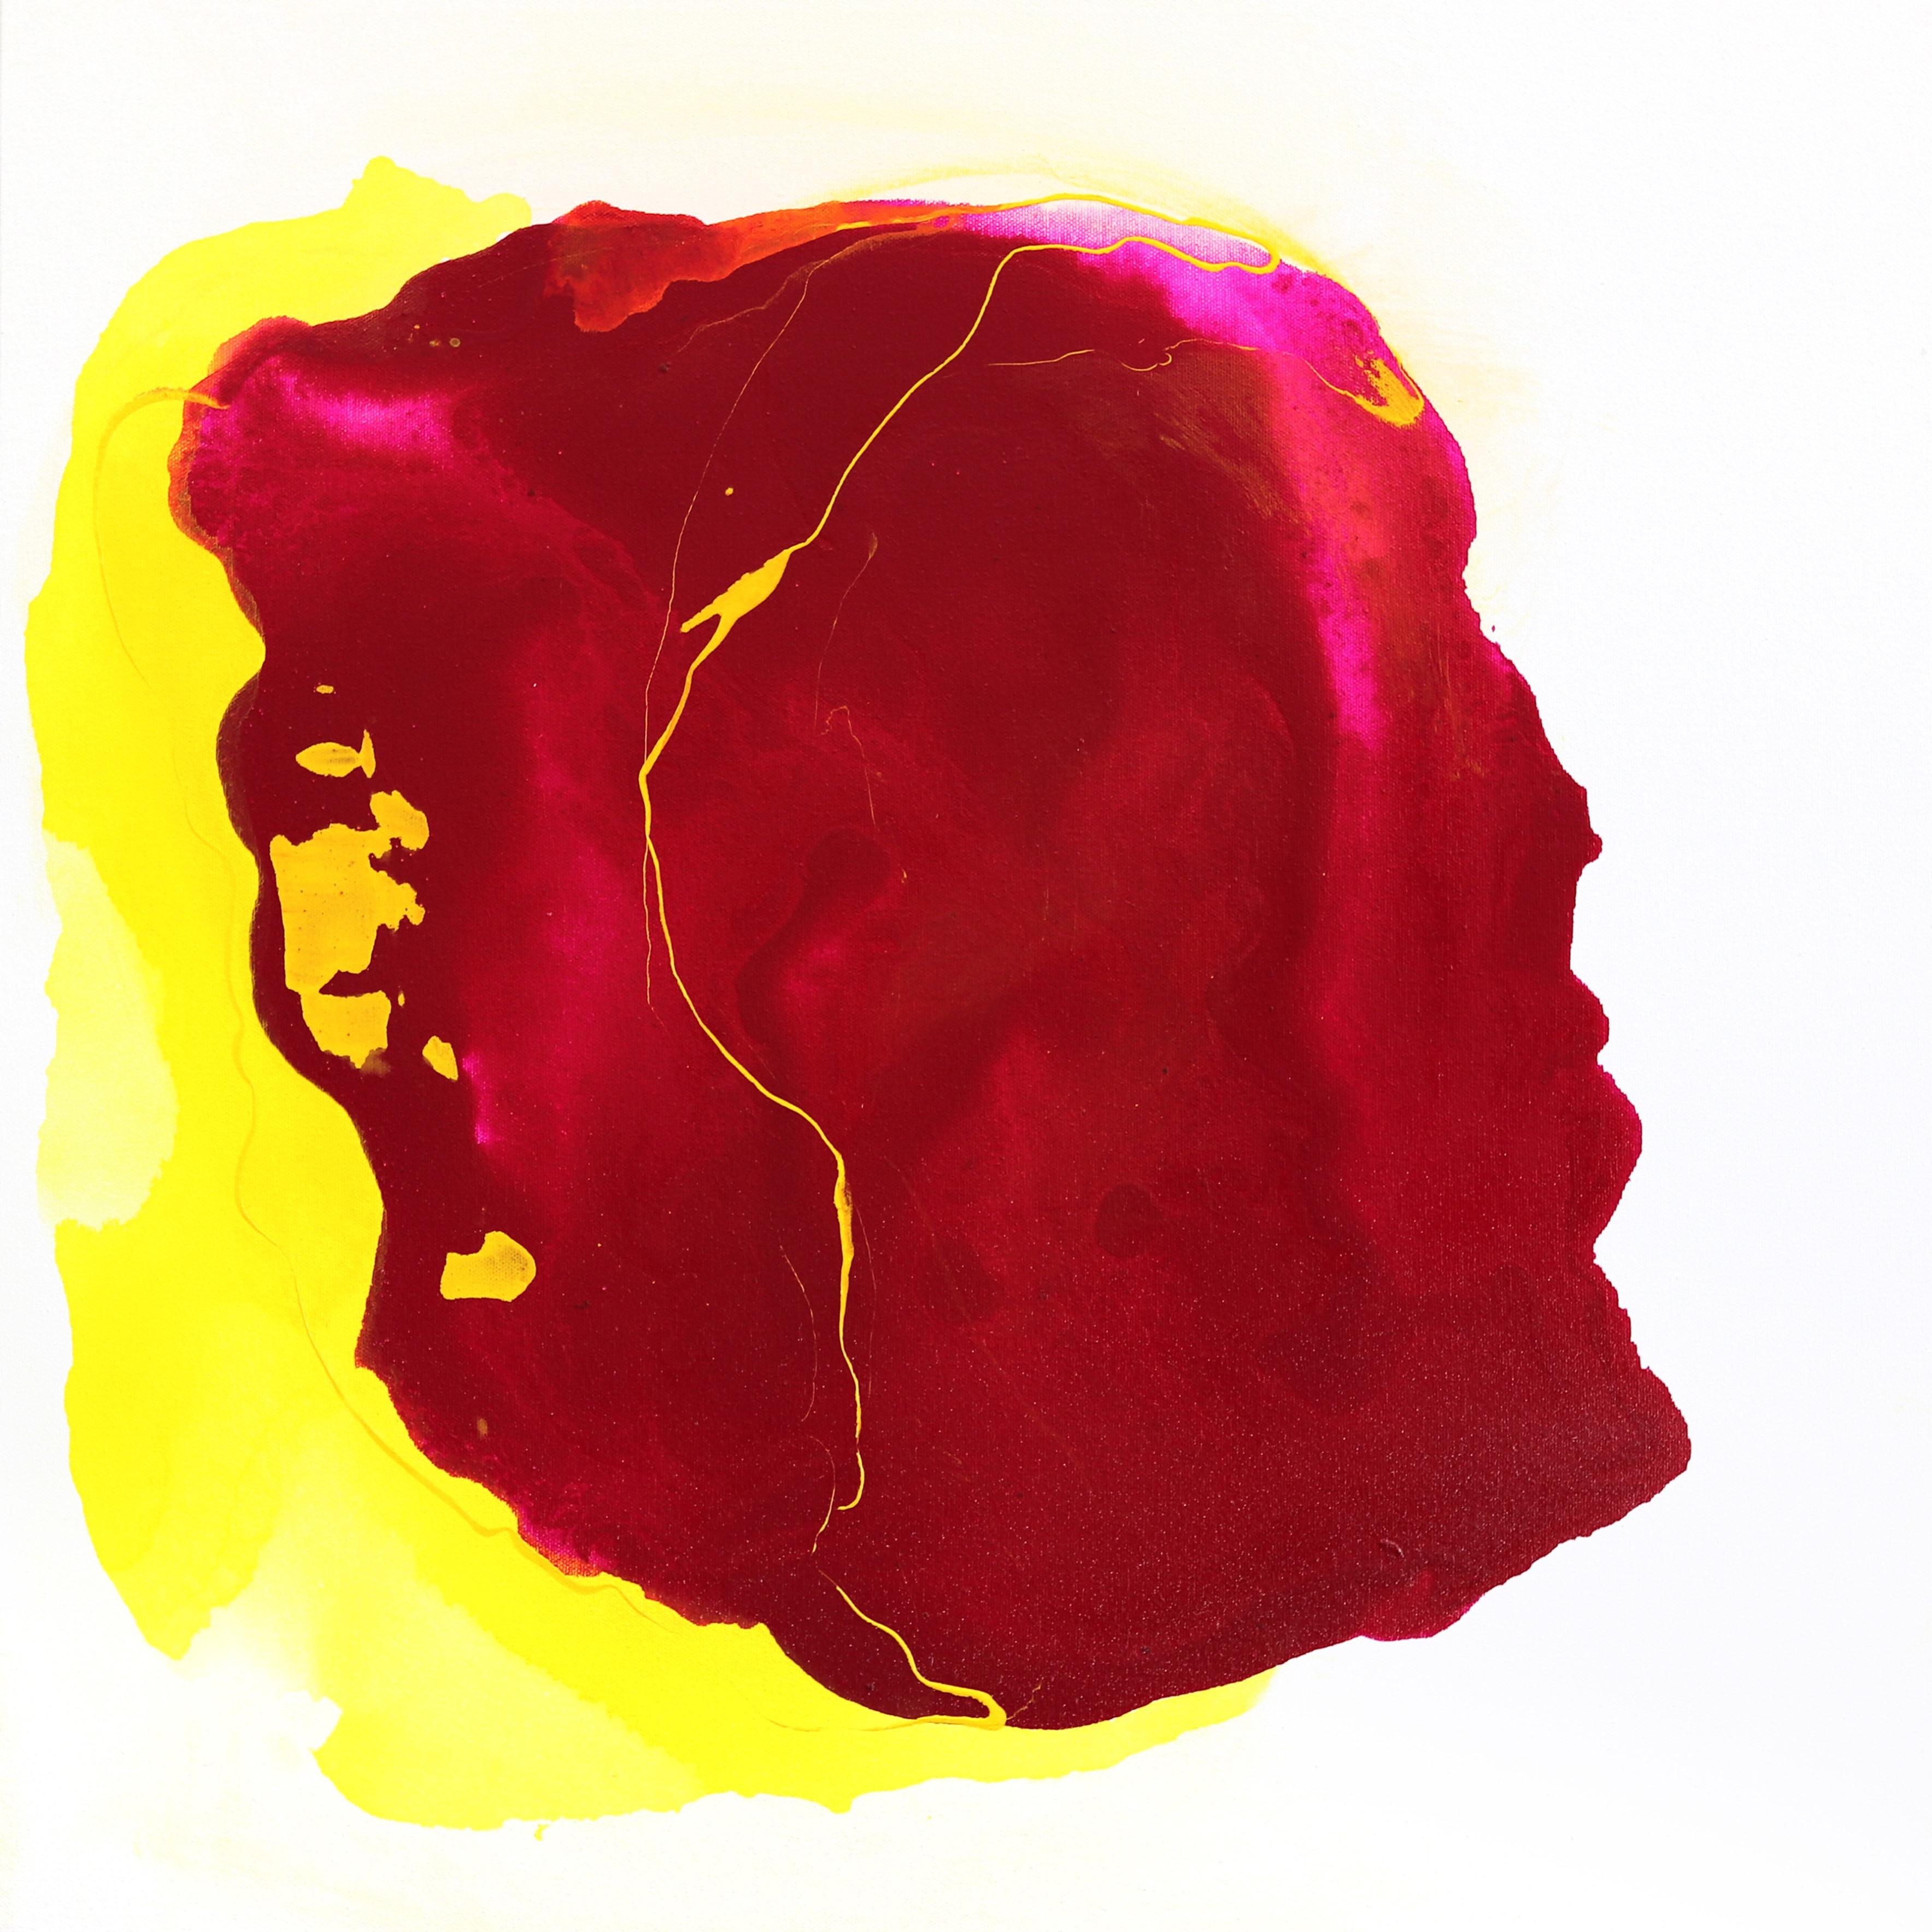 Reflections - Peinture originale sur toile jaune magenta abstraite - Mixed Media Art de Clara Berta